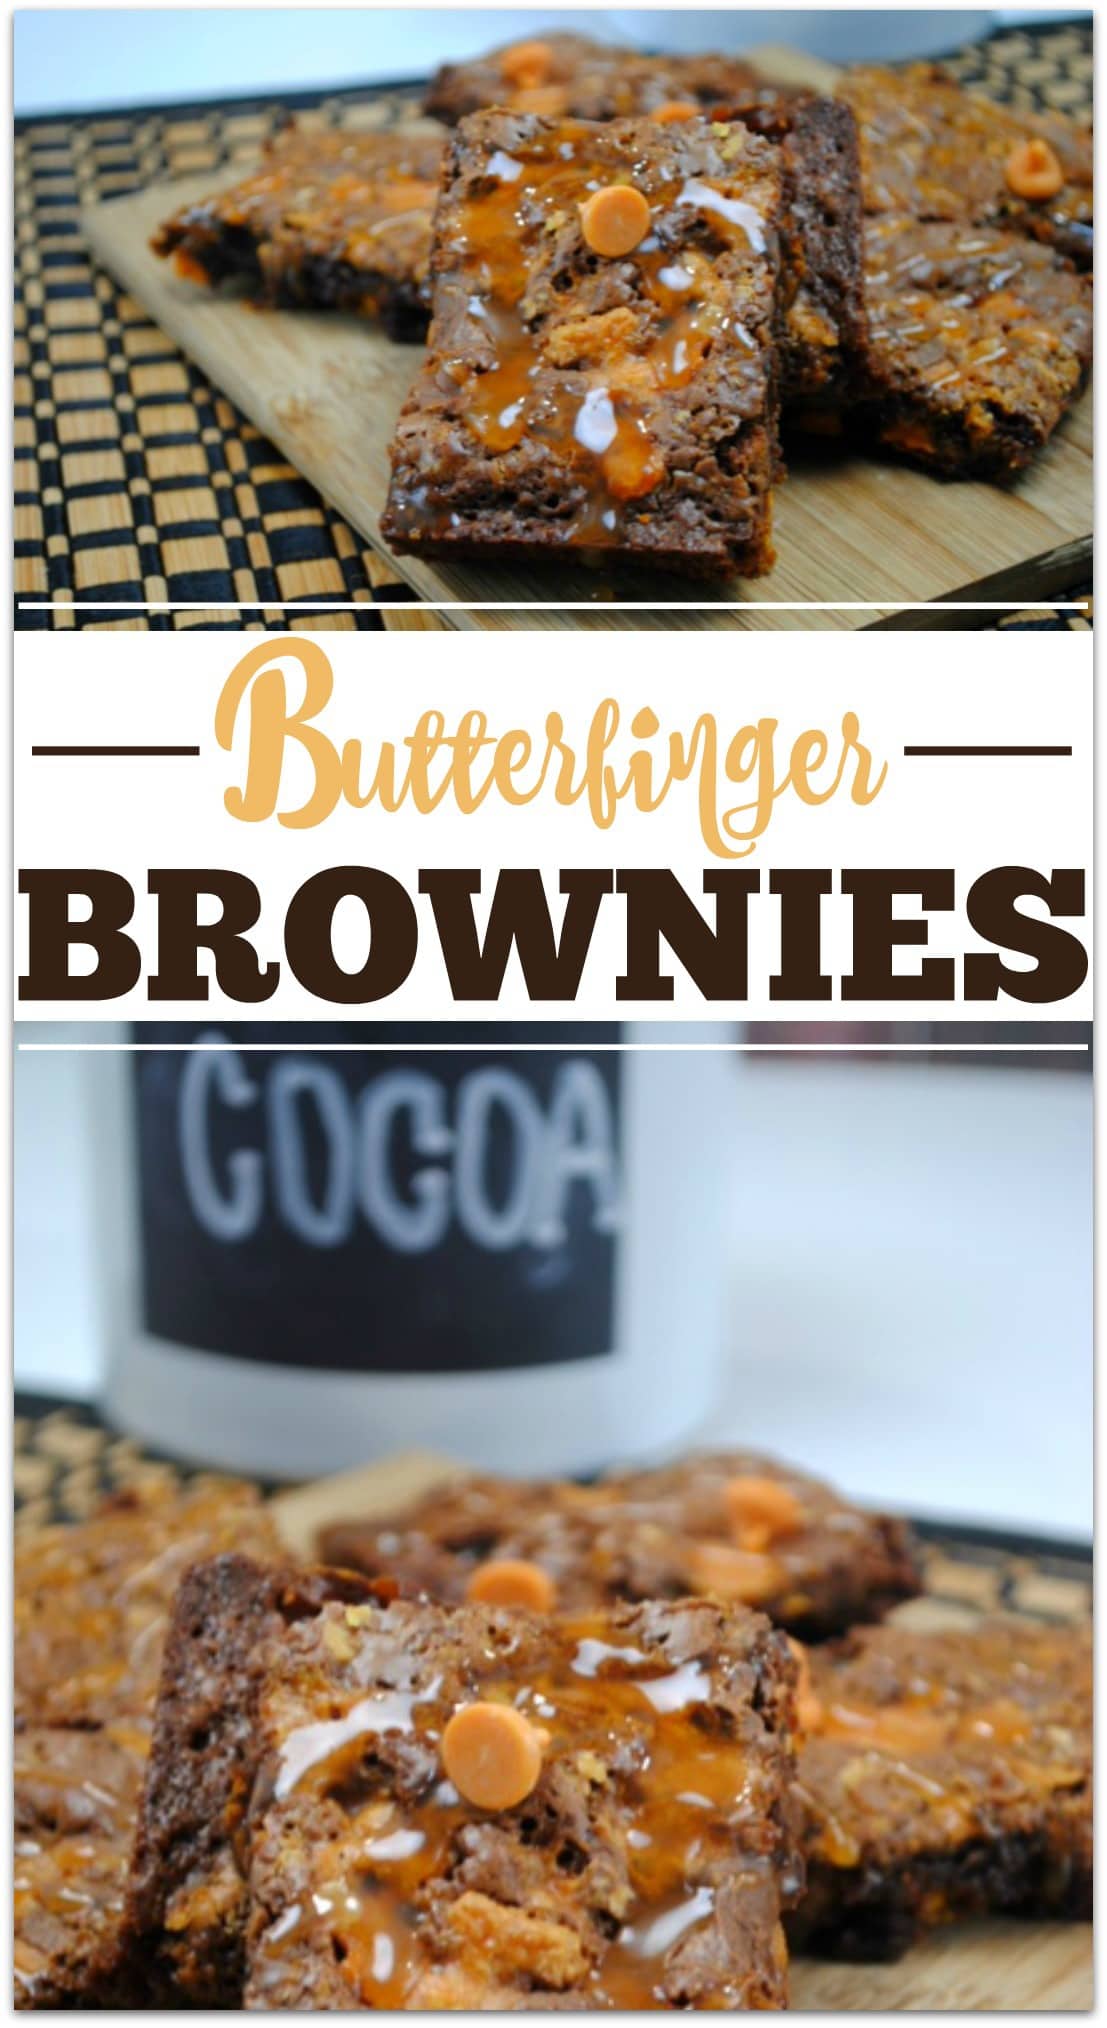 butterfinger brownies